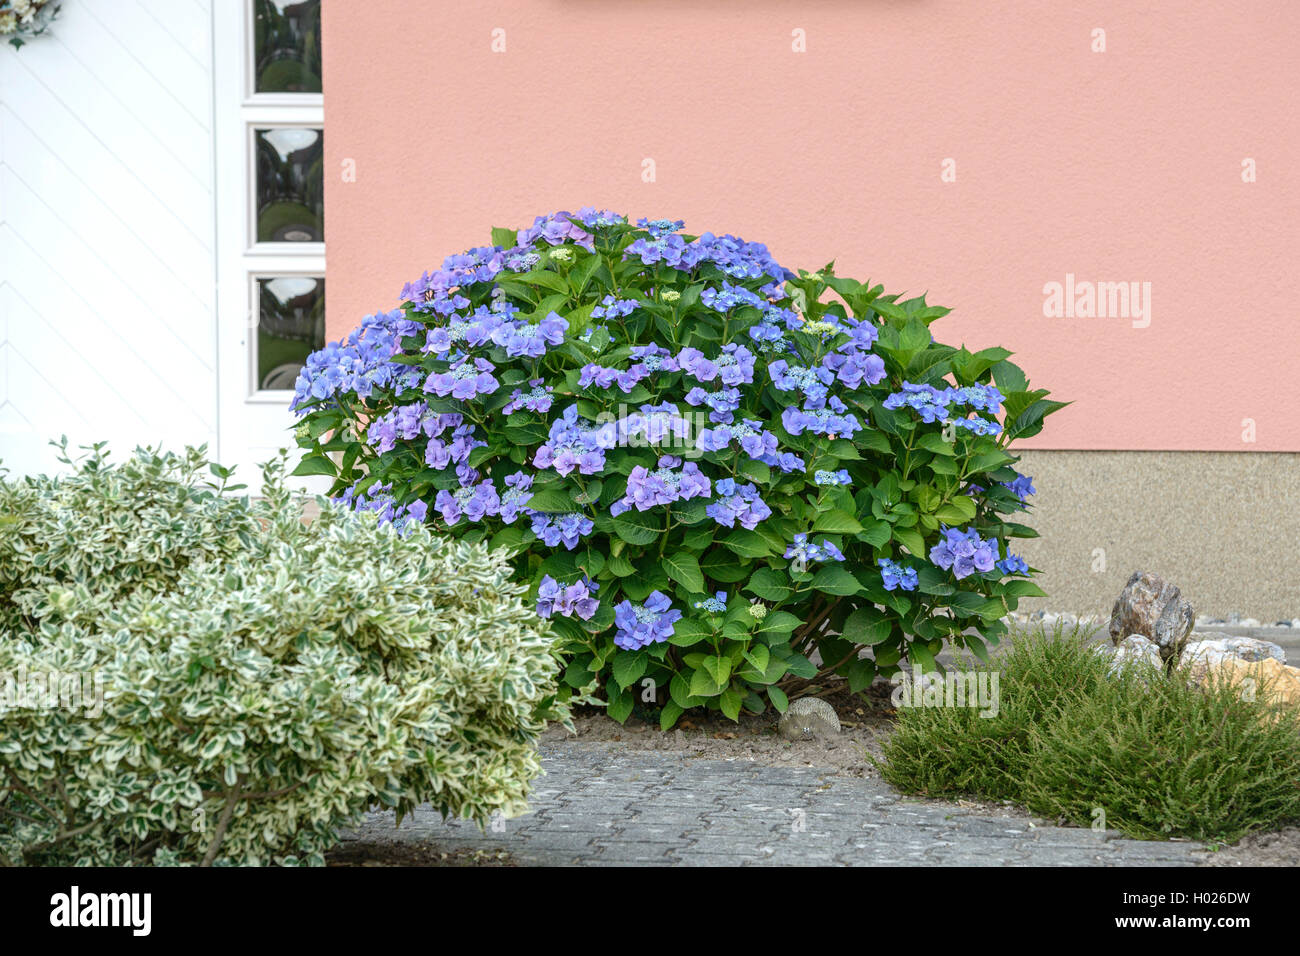 Garden hydrangea, Lace cap hydrangea (Hydrangea macrophylla 'Blaumeise', Hydrangea macrophylla Blaumeise), cultivar Blaumeise, Germany Stock Photo